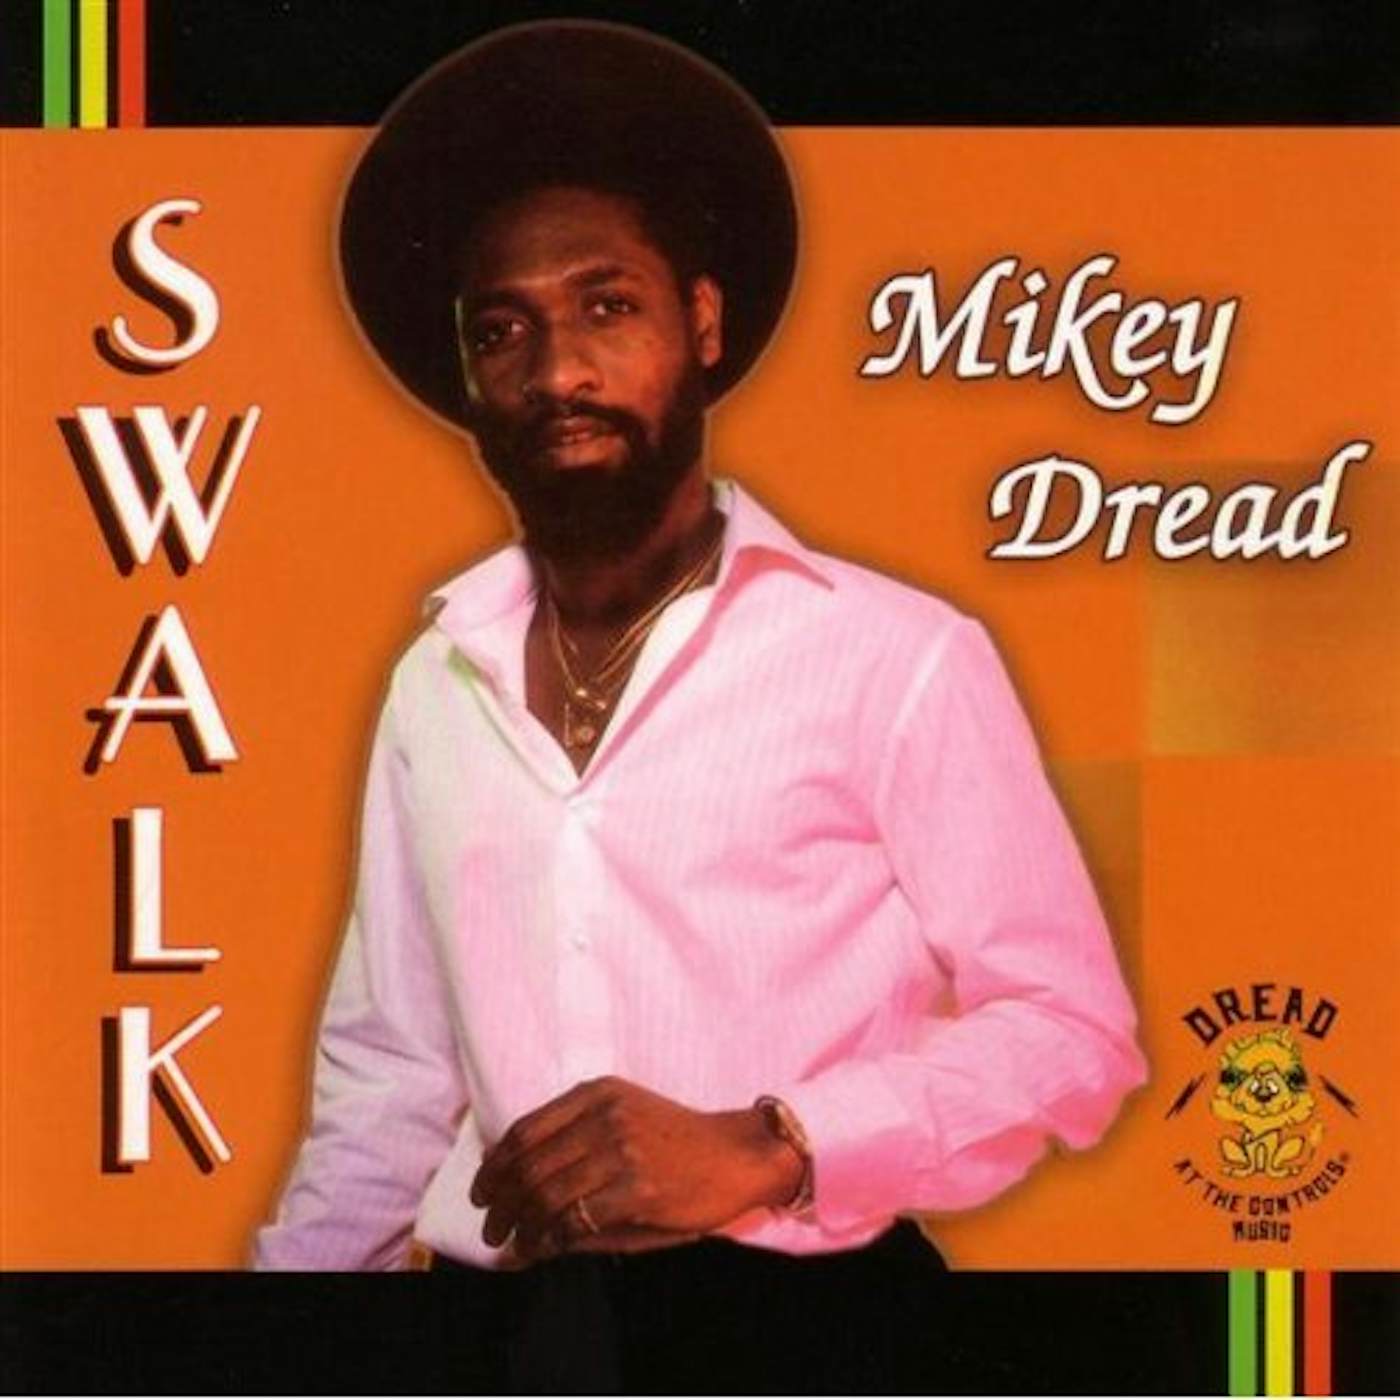 Mikey Dread SWALK CD